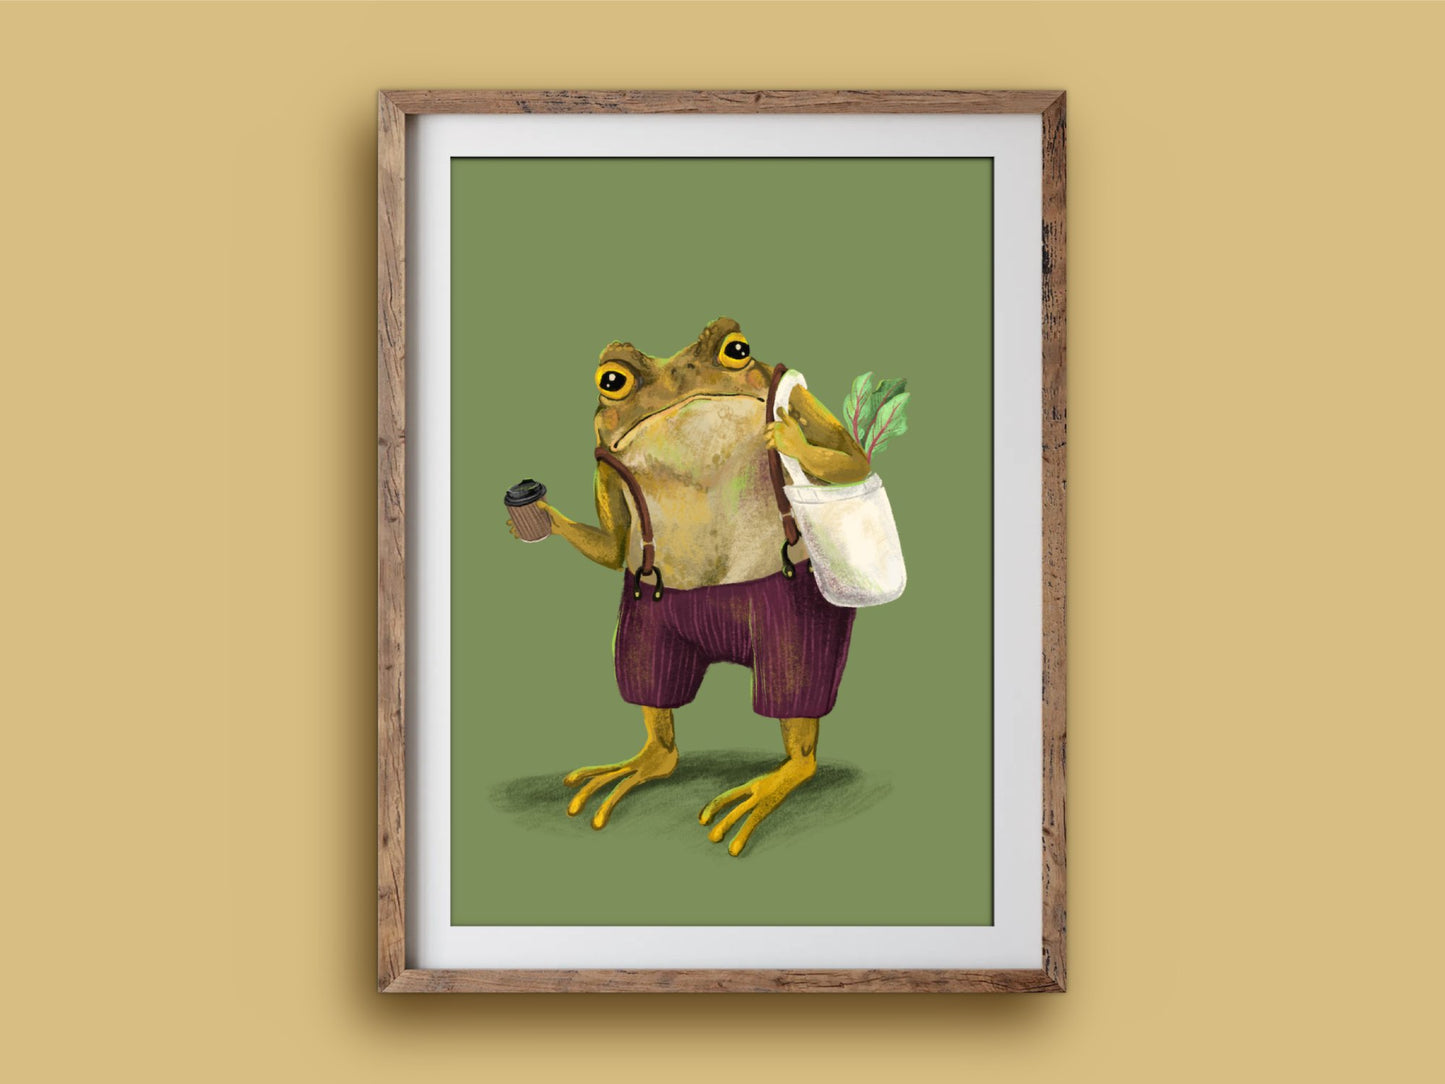 Anna Seed Art | Art Print - Hipster Toad - Fun, humorous illustration, wall art